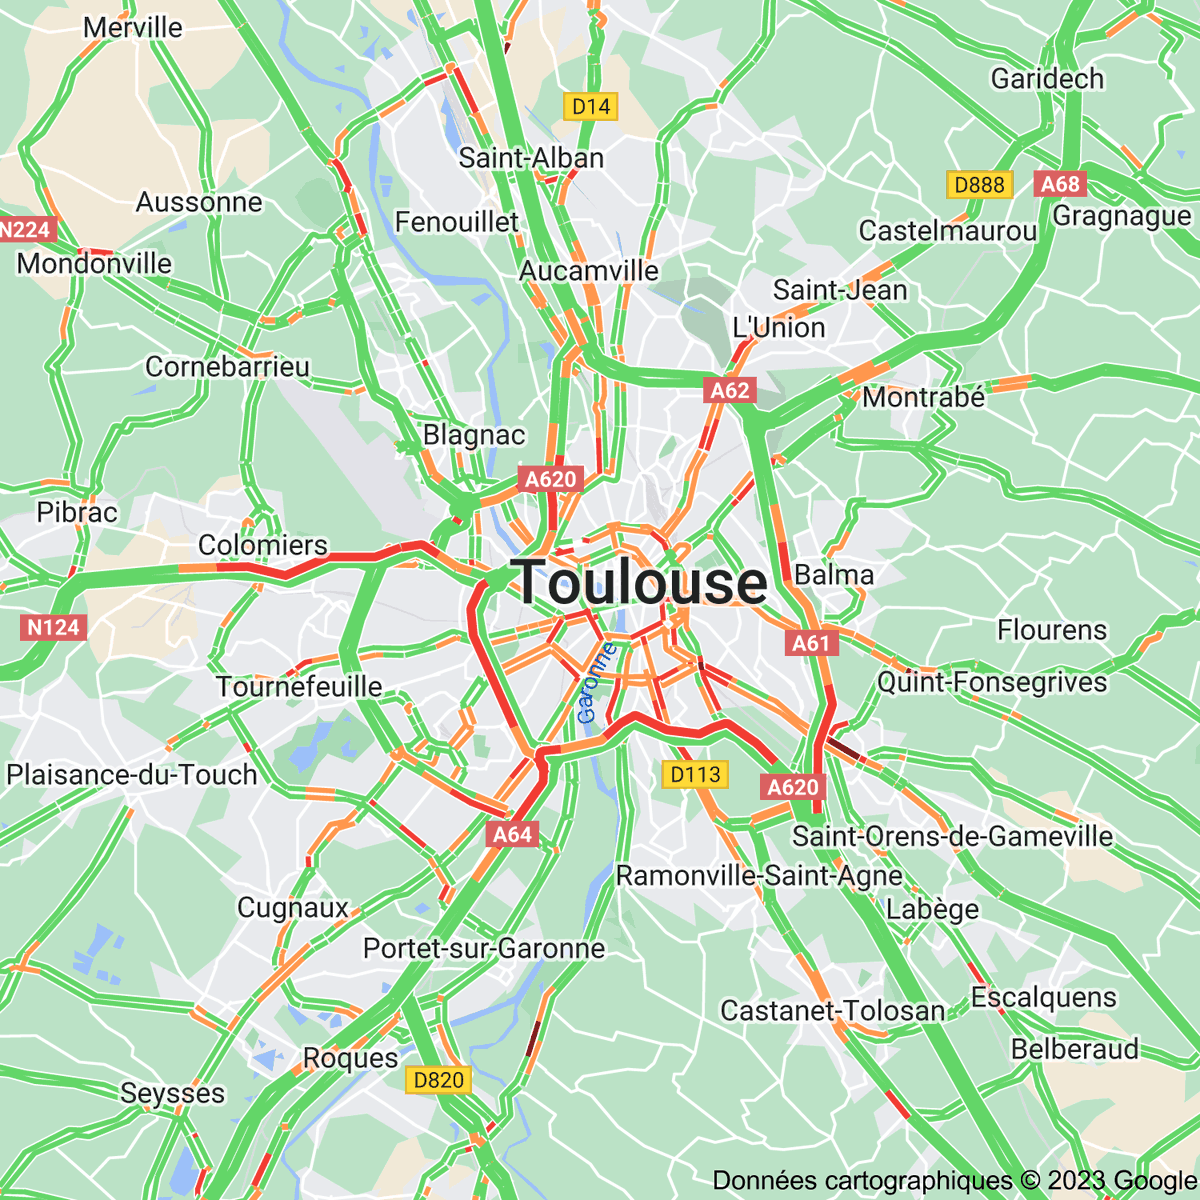 [FLASH 18:40] Trafic à Toulouse toulousetrafic.com #Toulouse #ToulousePeriph #InfoTrafic